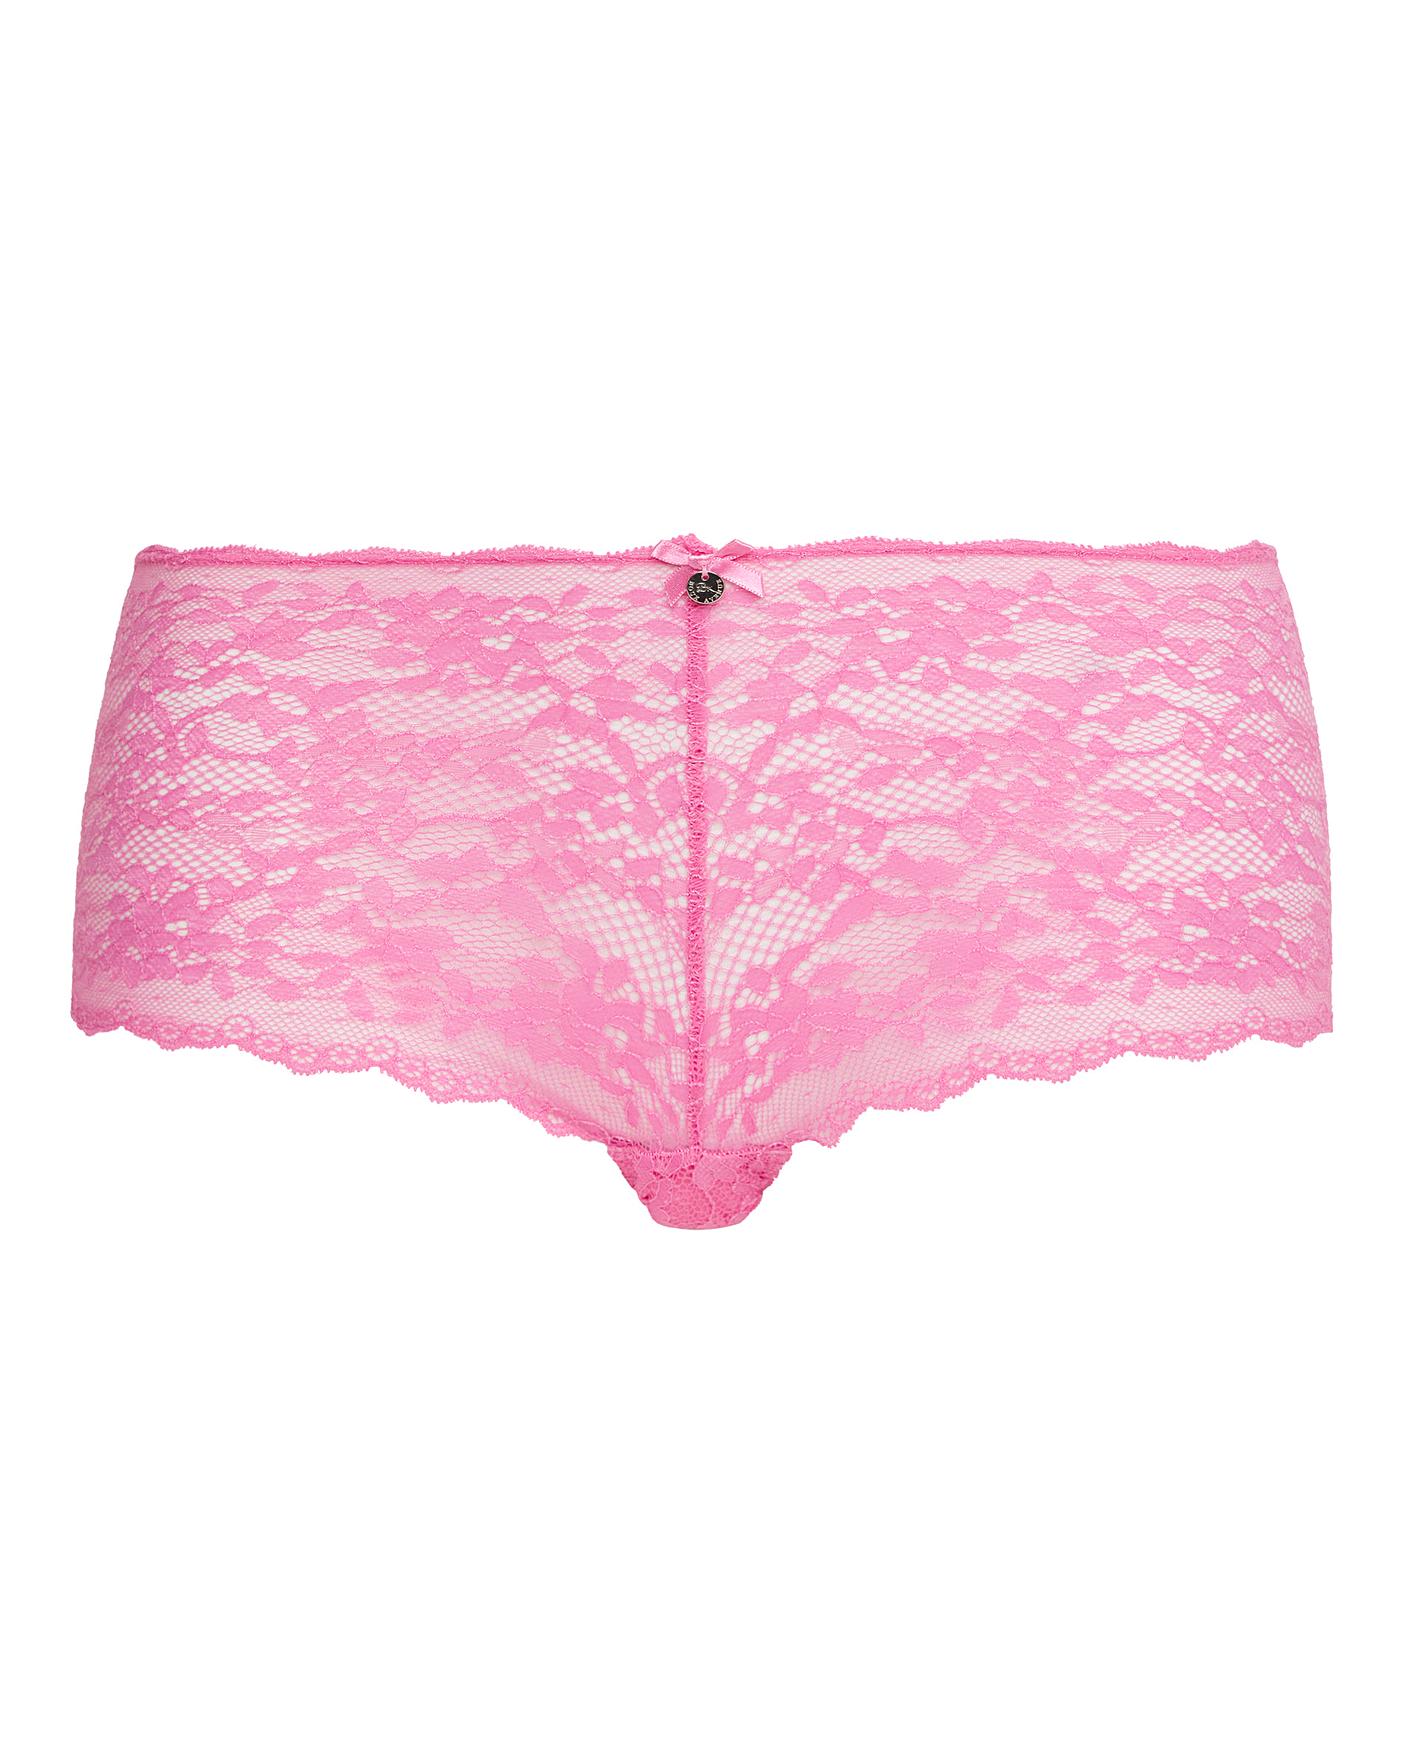 Chloe Contrast Lace Plunge Bra - Pink, Boux Avenue